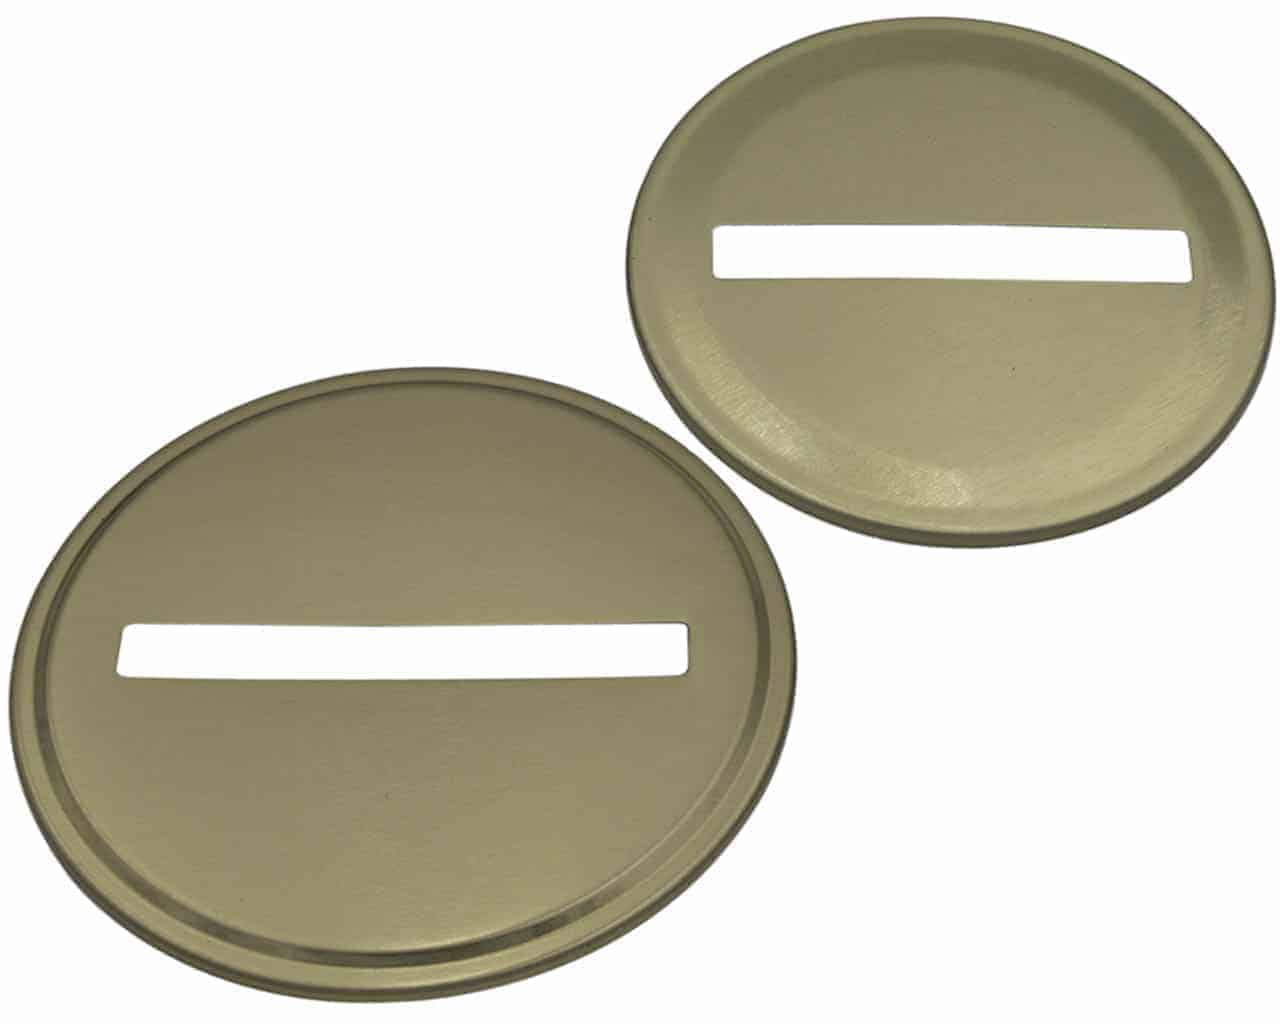 Mason Jar Lifestyle Gold coin slot bank lid for regular and wide mouth Mason jars